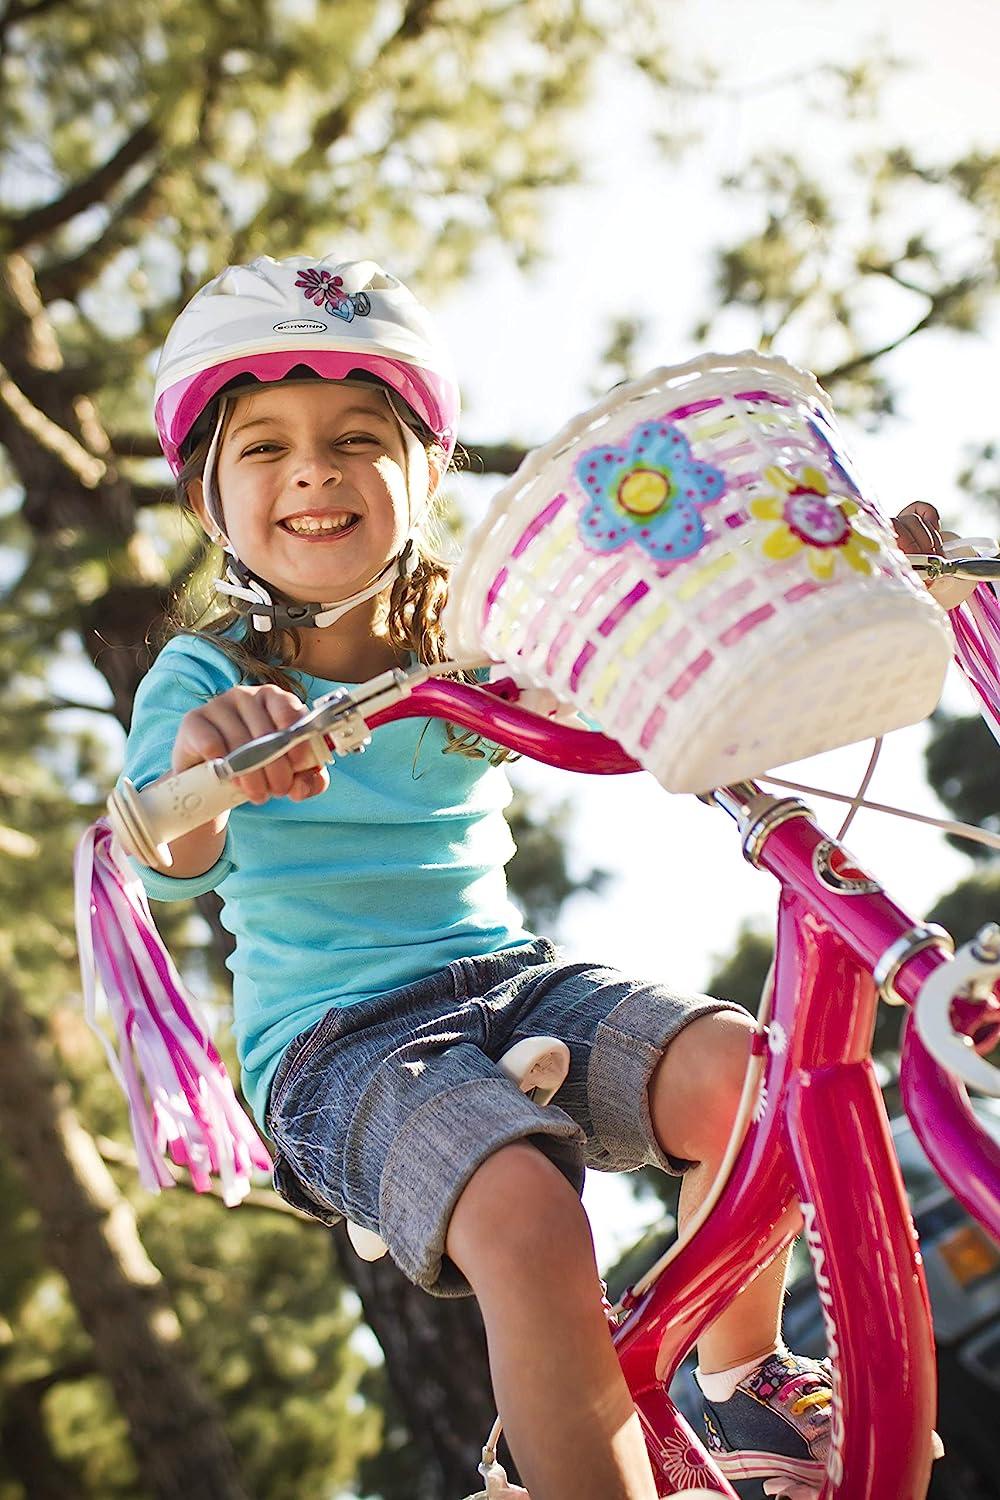 Schwinn Girls Bicycle Basket, Kids Front Bike Accessory Light-up Flowers